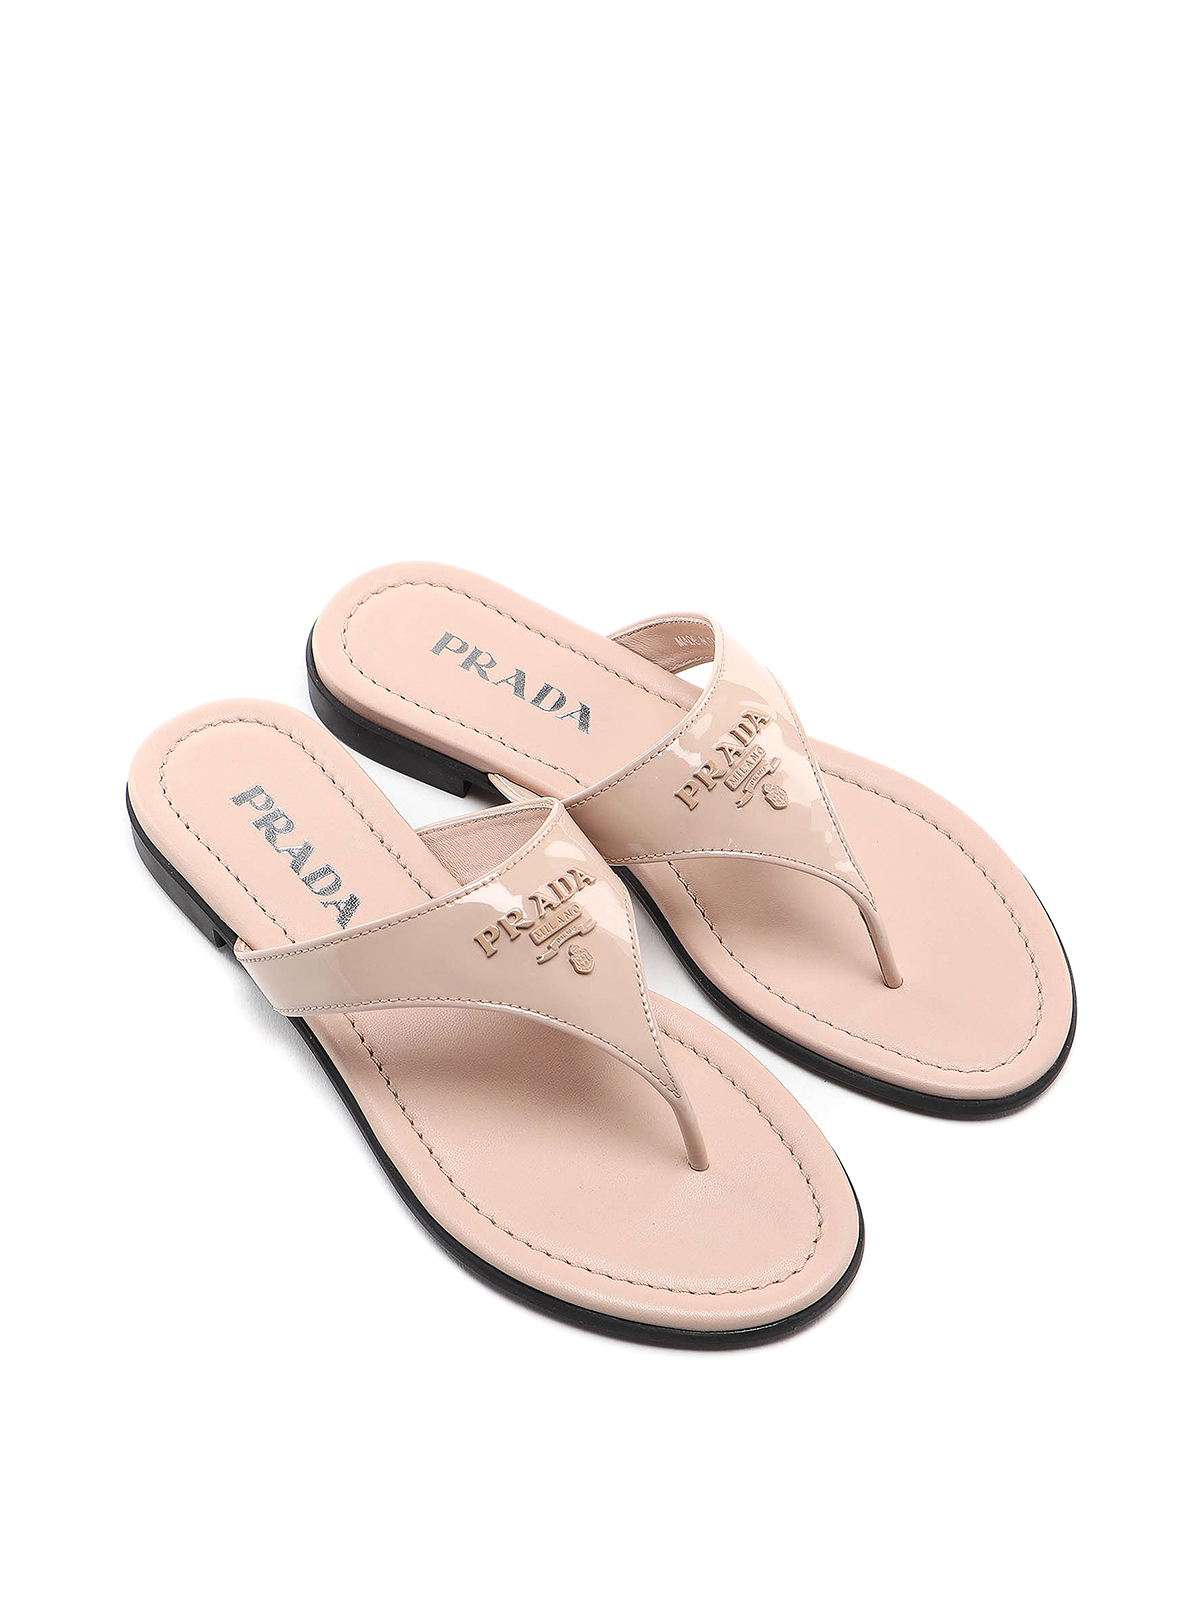 Prada - Patent thong sandals - صندل 